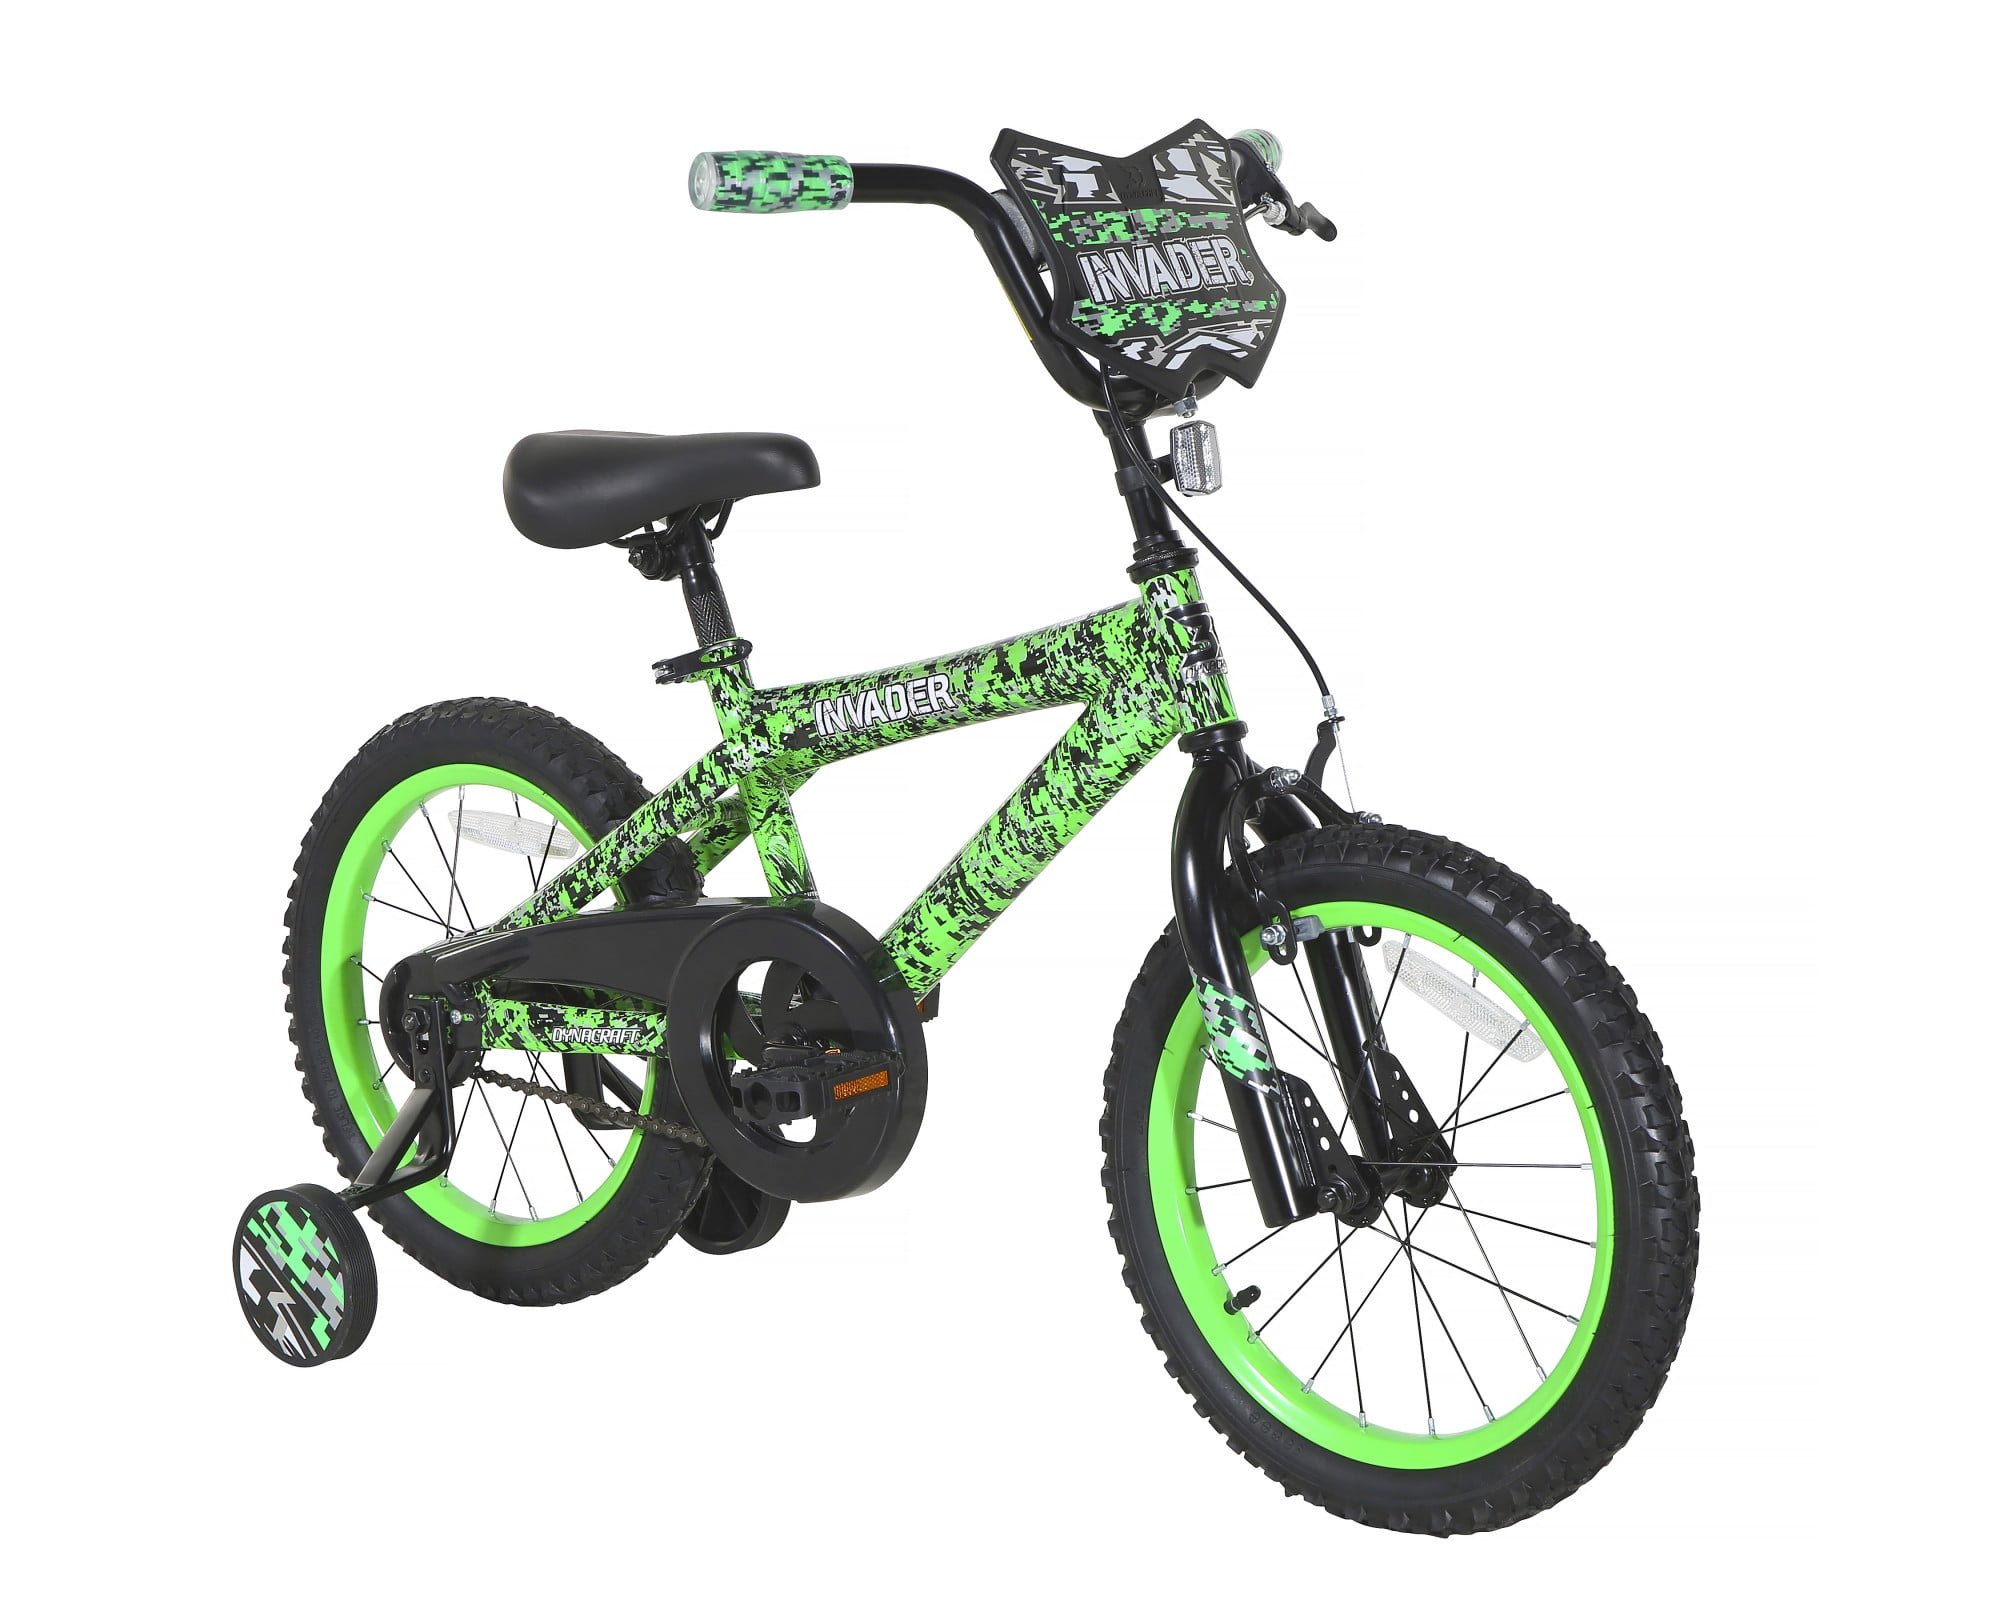 Gravel Blaster Black for sale online Dynacraft 8007-32TJ 12 inch Bicycle for Kids 